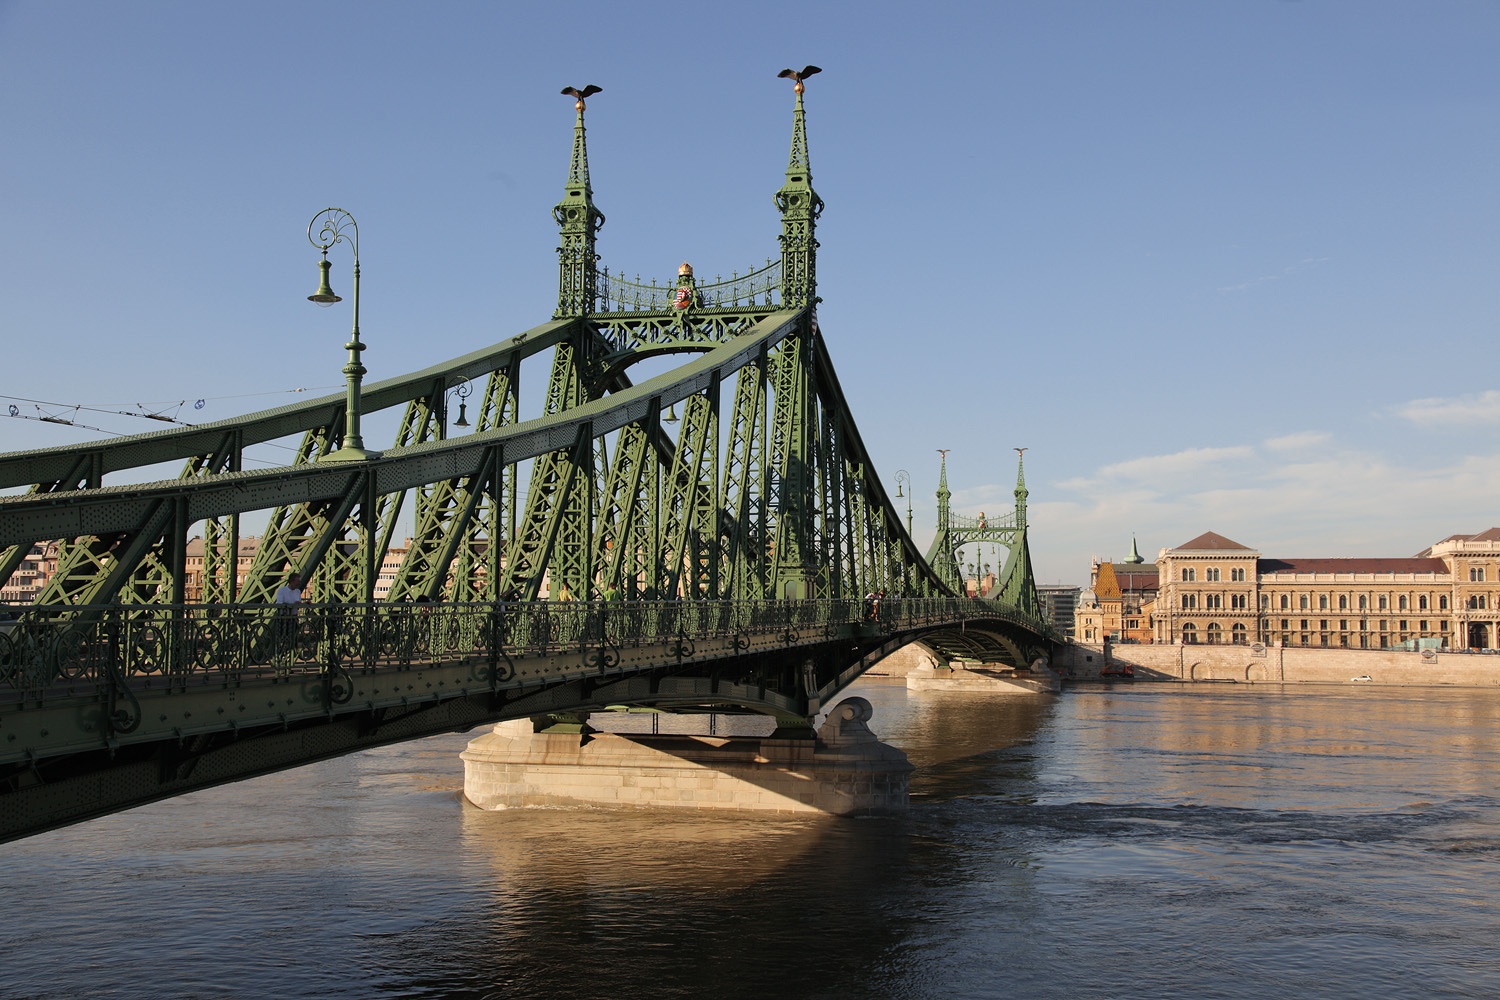 bill-hocker-liberty-bridge-budapest-hungary-2013